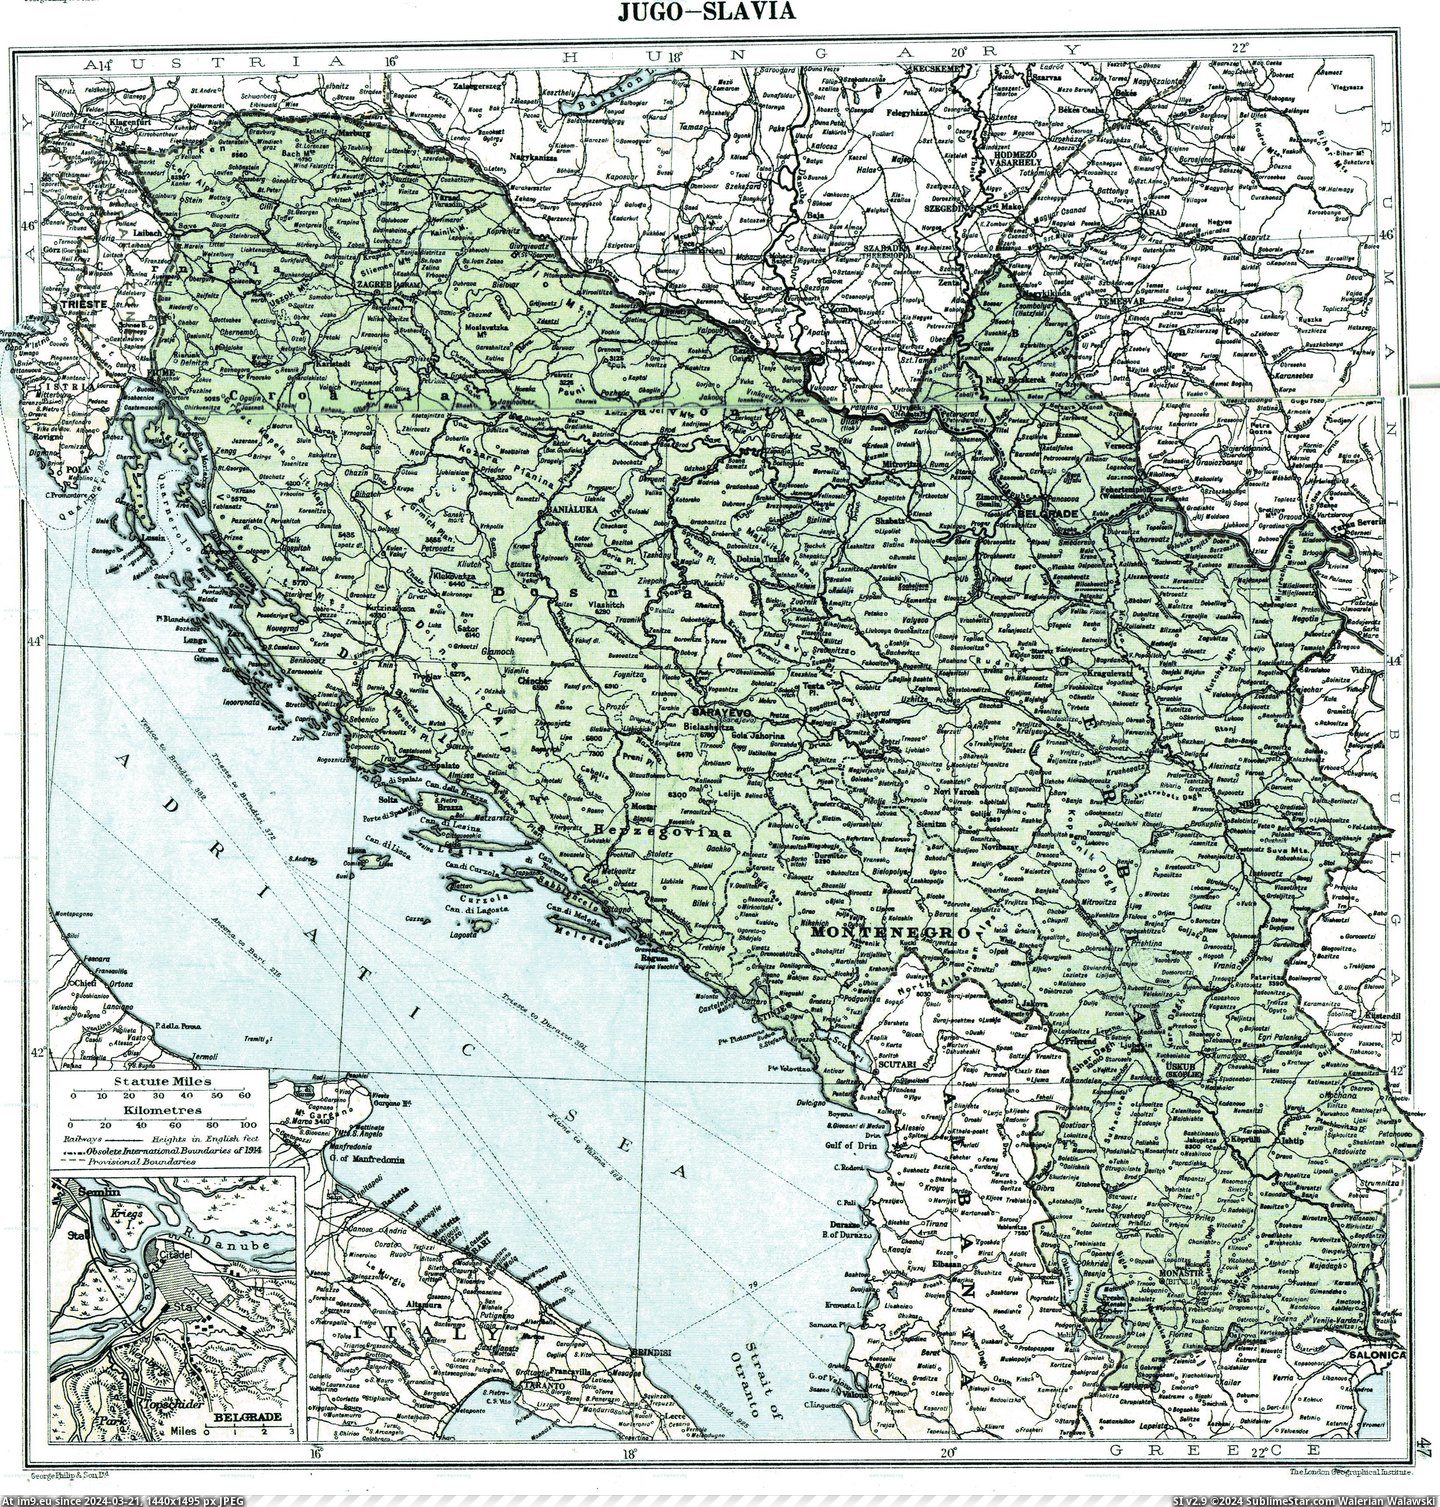 #Map #Kingdom #Yugoslavia #Early [Mapporn] Early map of Kingdom of Serbs, Croats and Slovenes (Yugoslavia) [3286x3424] Pic. (Изображение из альбом My r/MAPS favs))